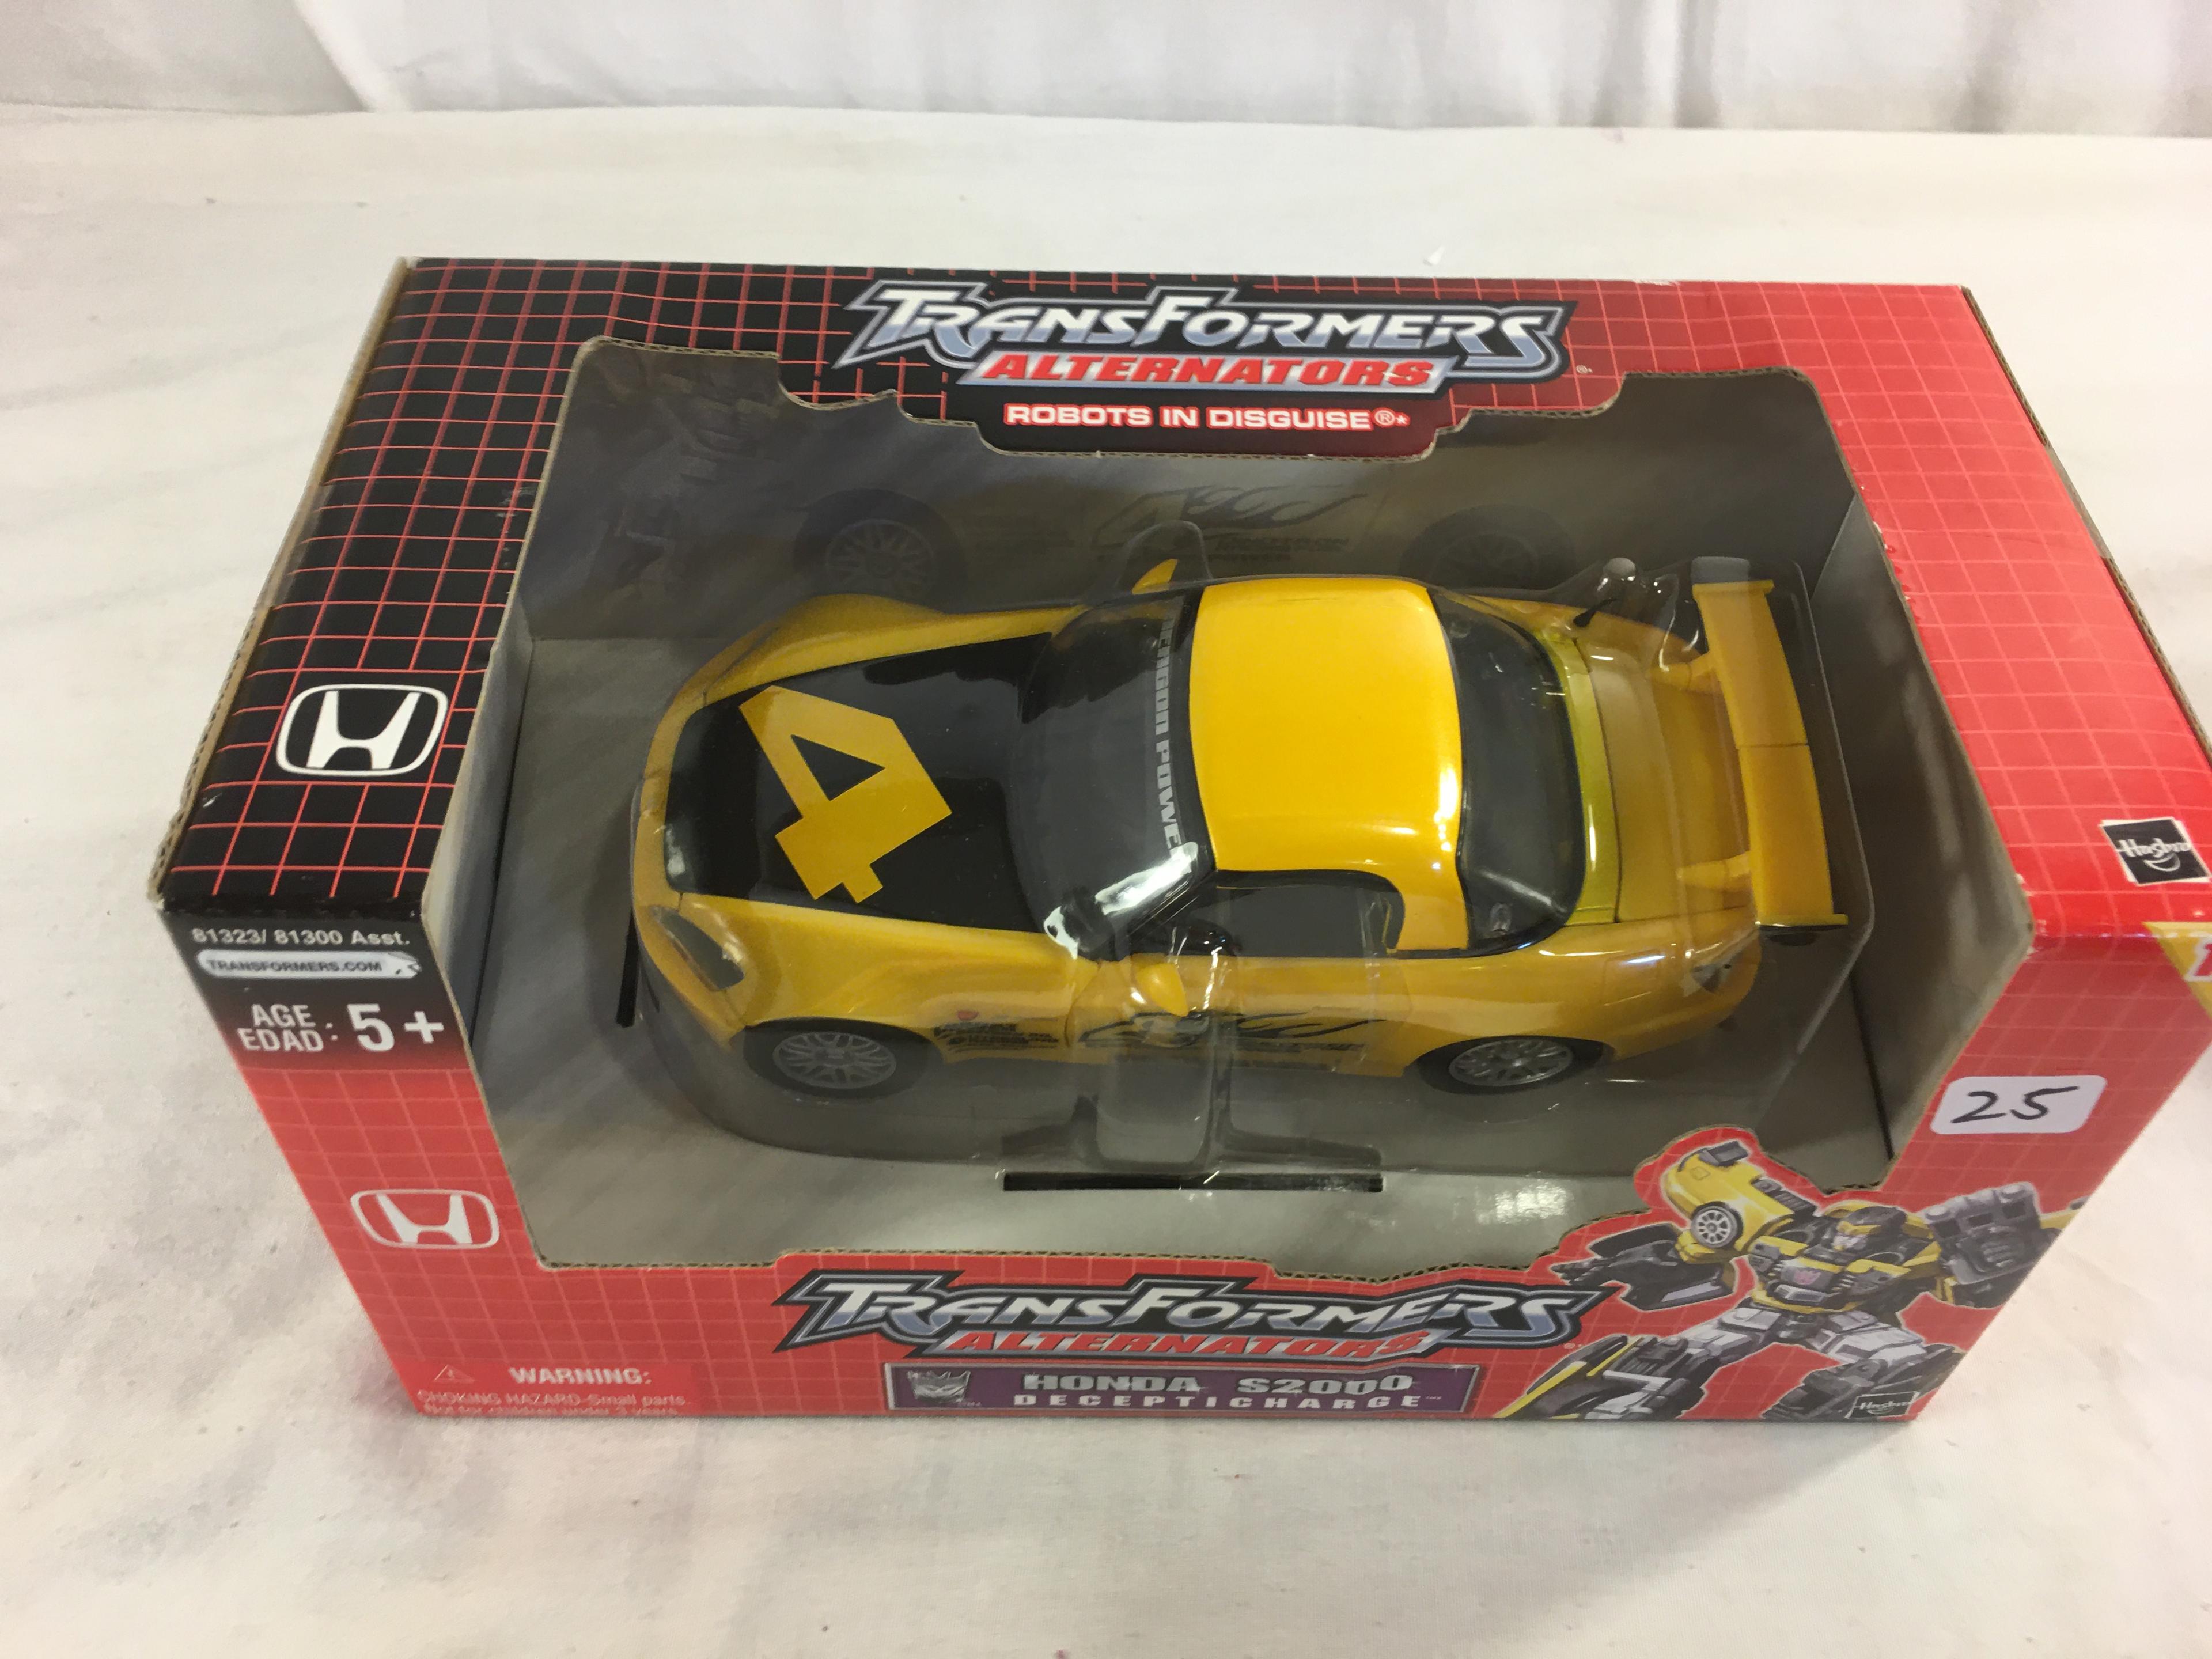 NIB Hasbro Transformers Alternators Honda S2000 Deceipticharge